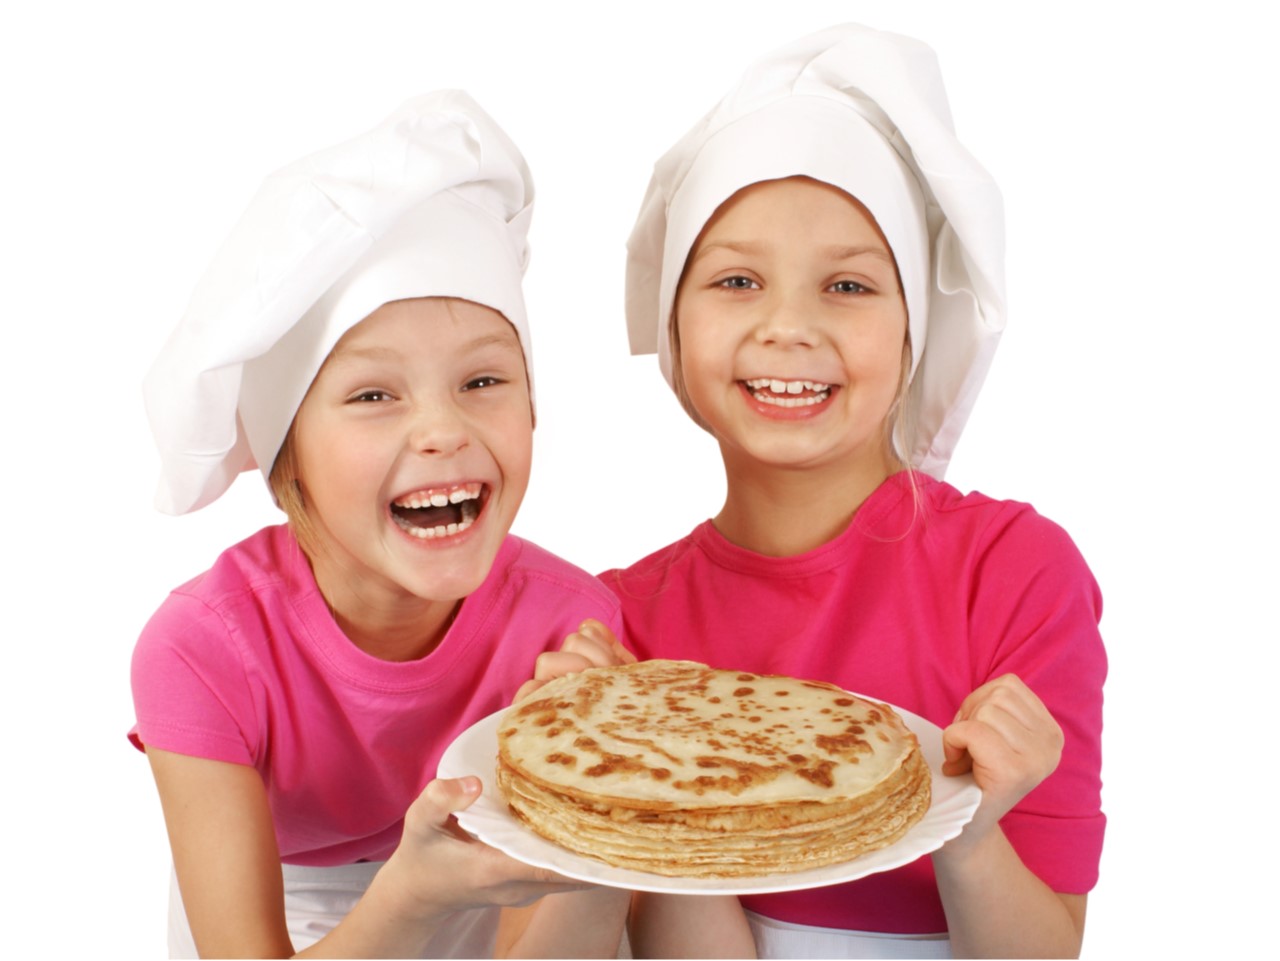 Pancakes with kids